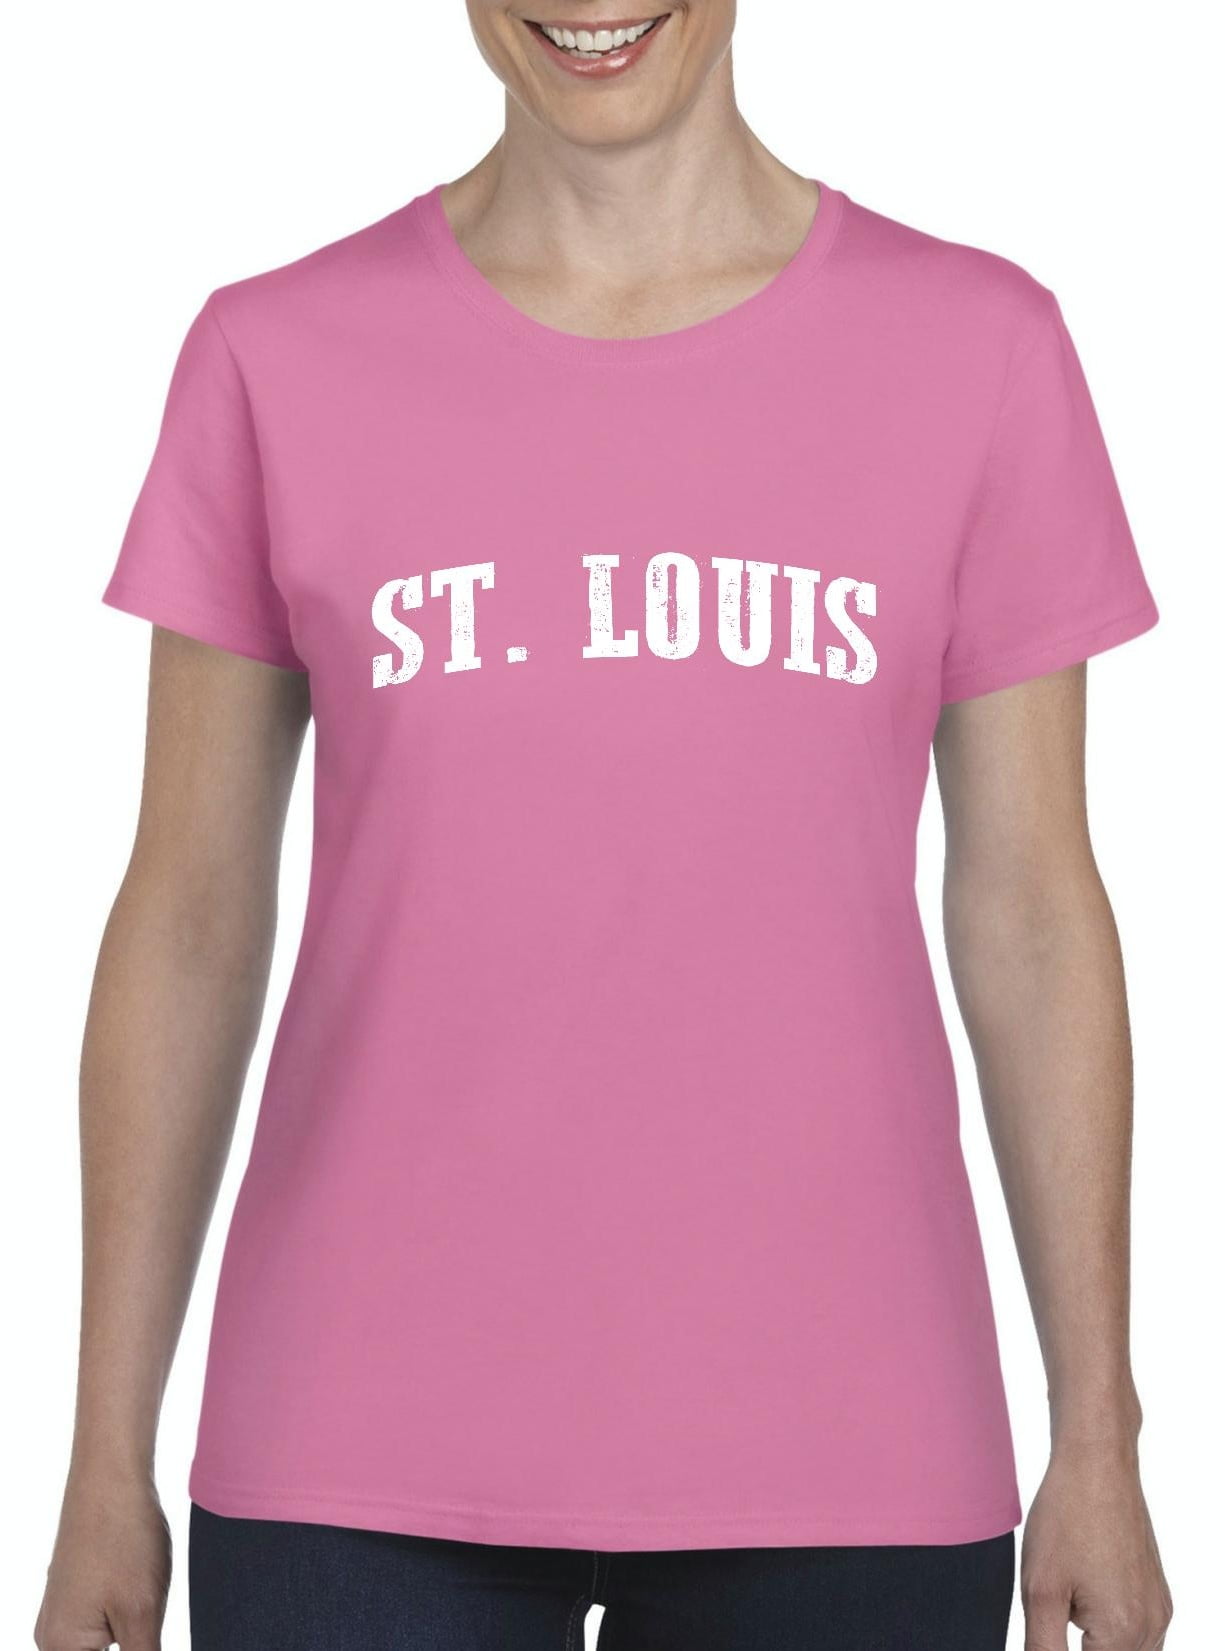 Artix - Women's T-Shirt V-Neck Short Sleeve - St. Louis 